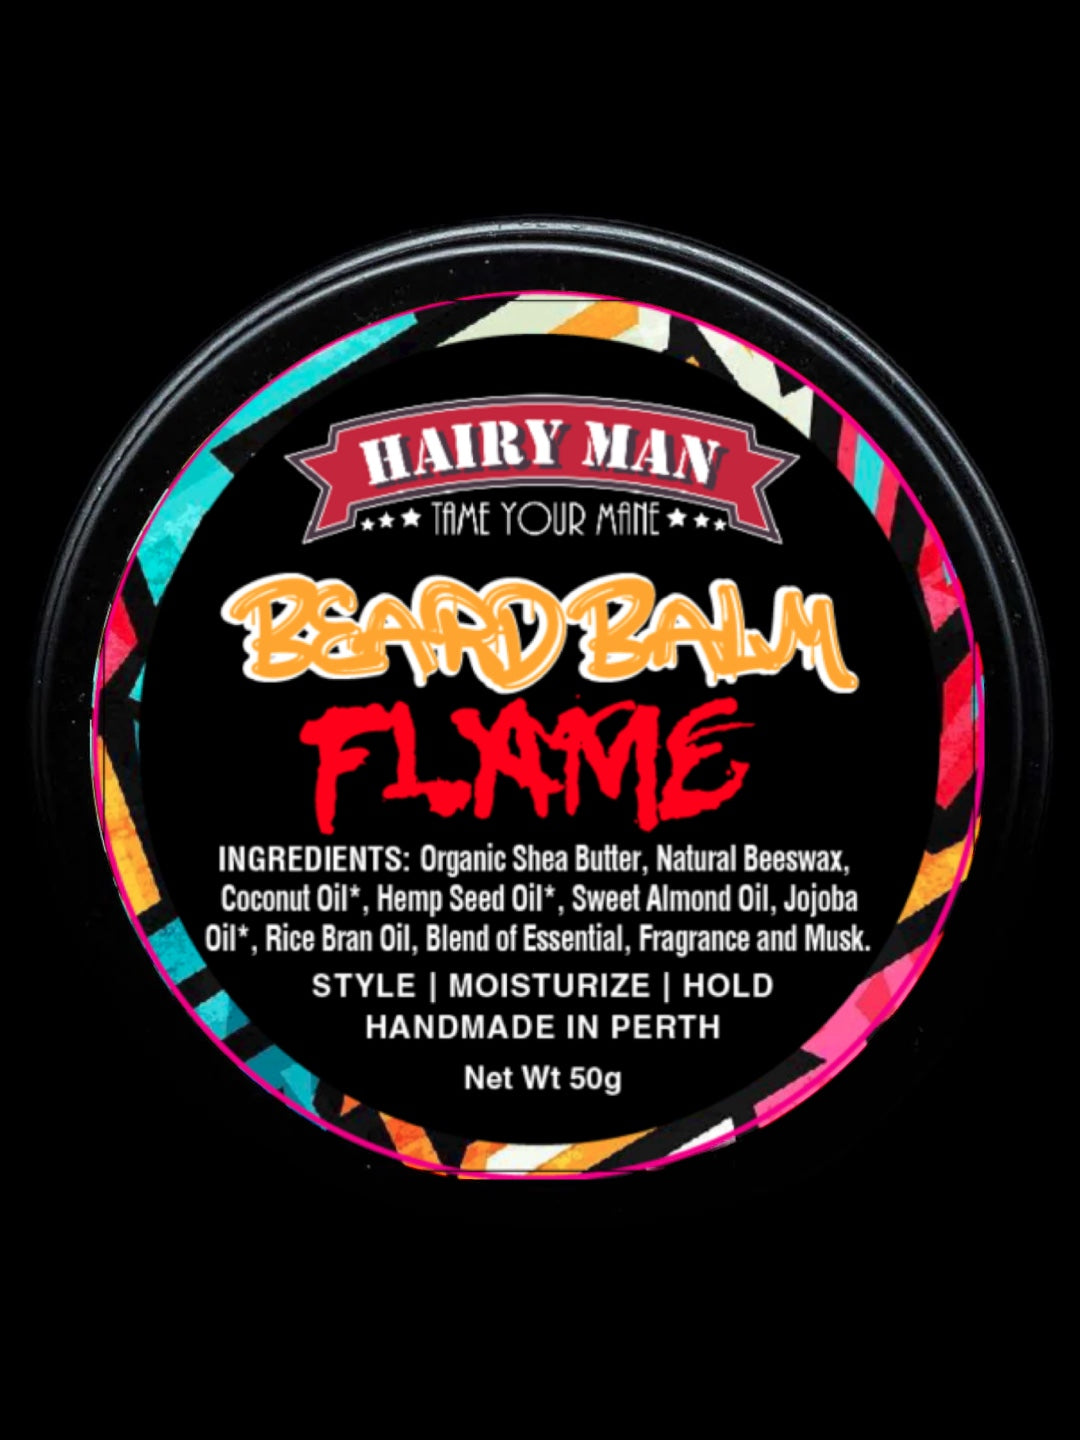 Hairy Man Care Flame beard balm